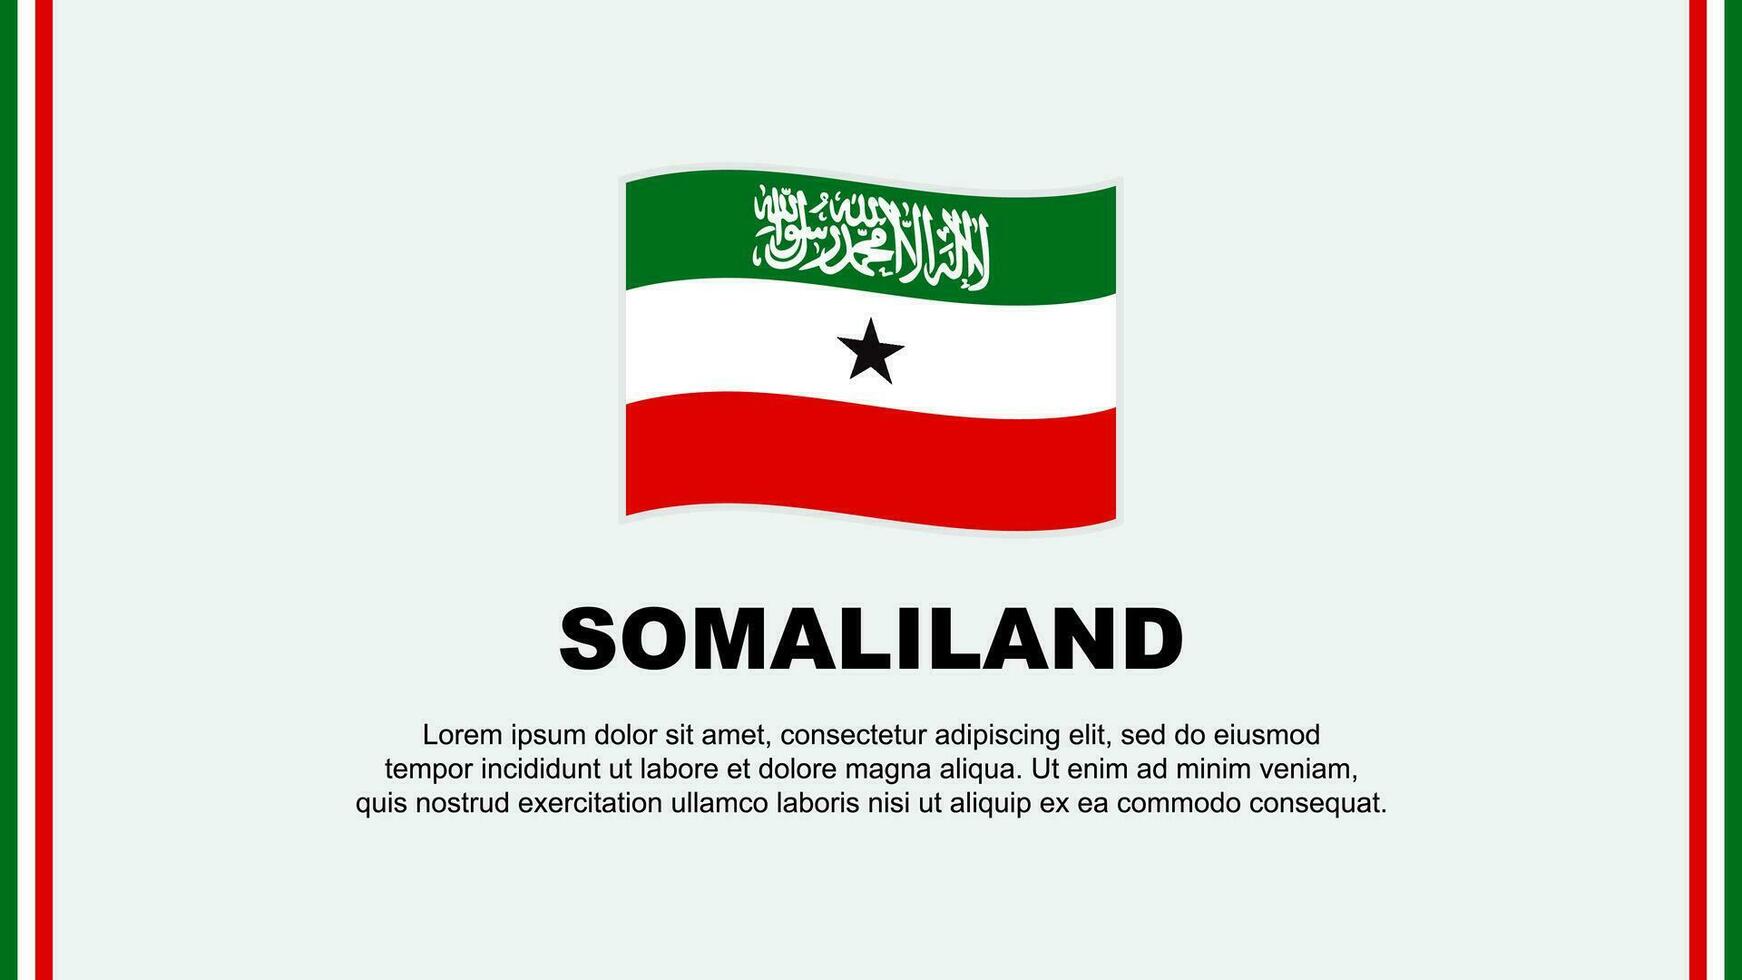 Somaliland Flag Abstract Background Design Template. Somaliland Independence Day Banner Social Media Vector Illustration. Somaliland Cartoon